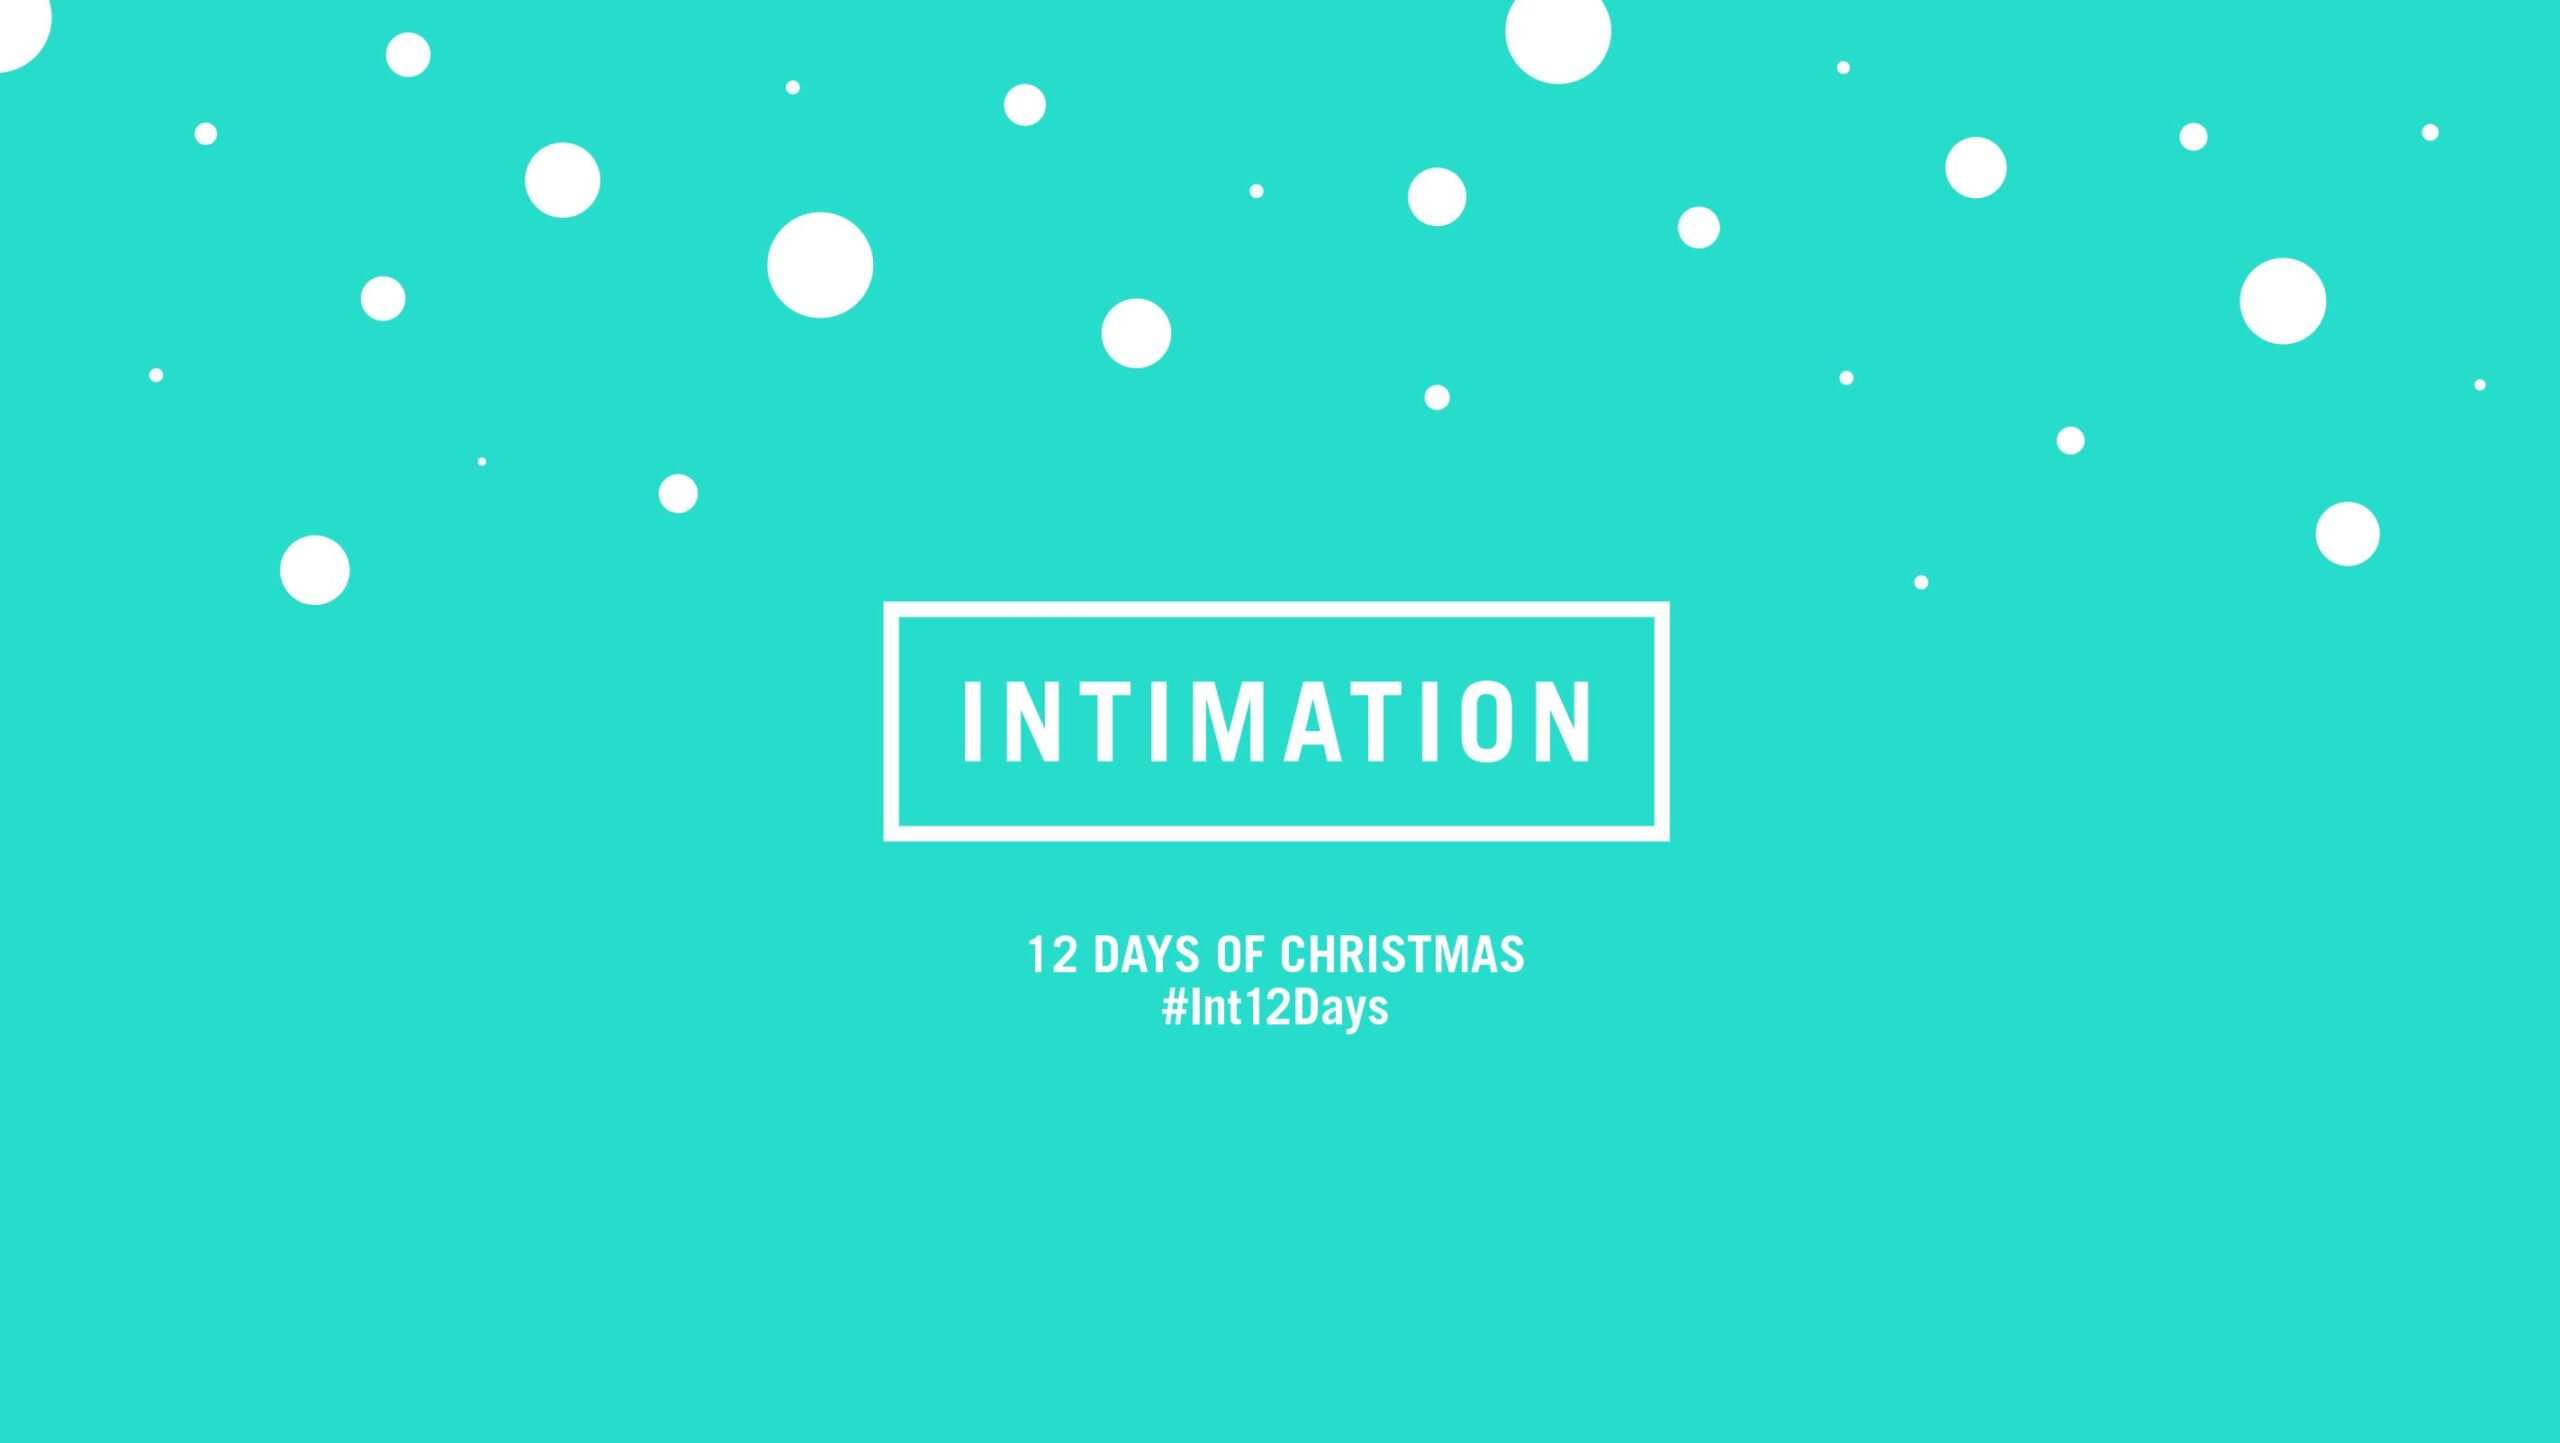 12 Days of Christmas – The Christmas Creative Brief